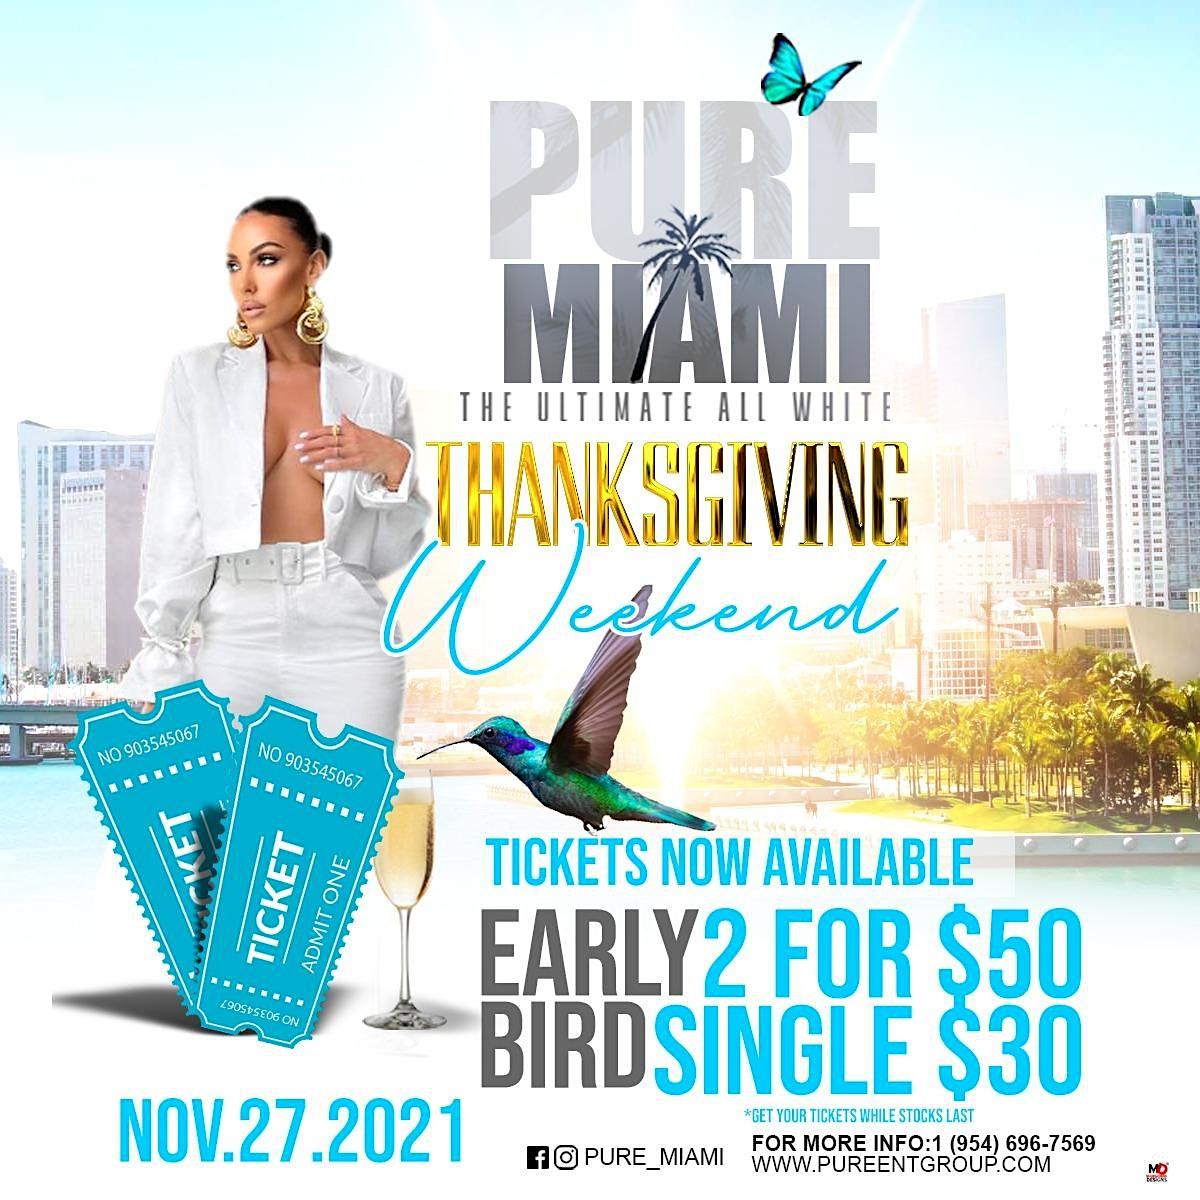 Pure Miami Ultimate All White Thanksgiving 2022
Sat Nov 26, 4:00 PM - Sat Nov 26, 11:00 PM
in 22 days